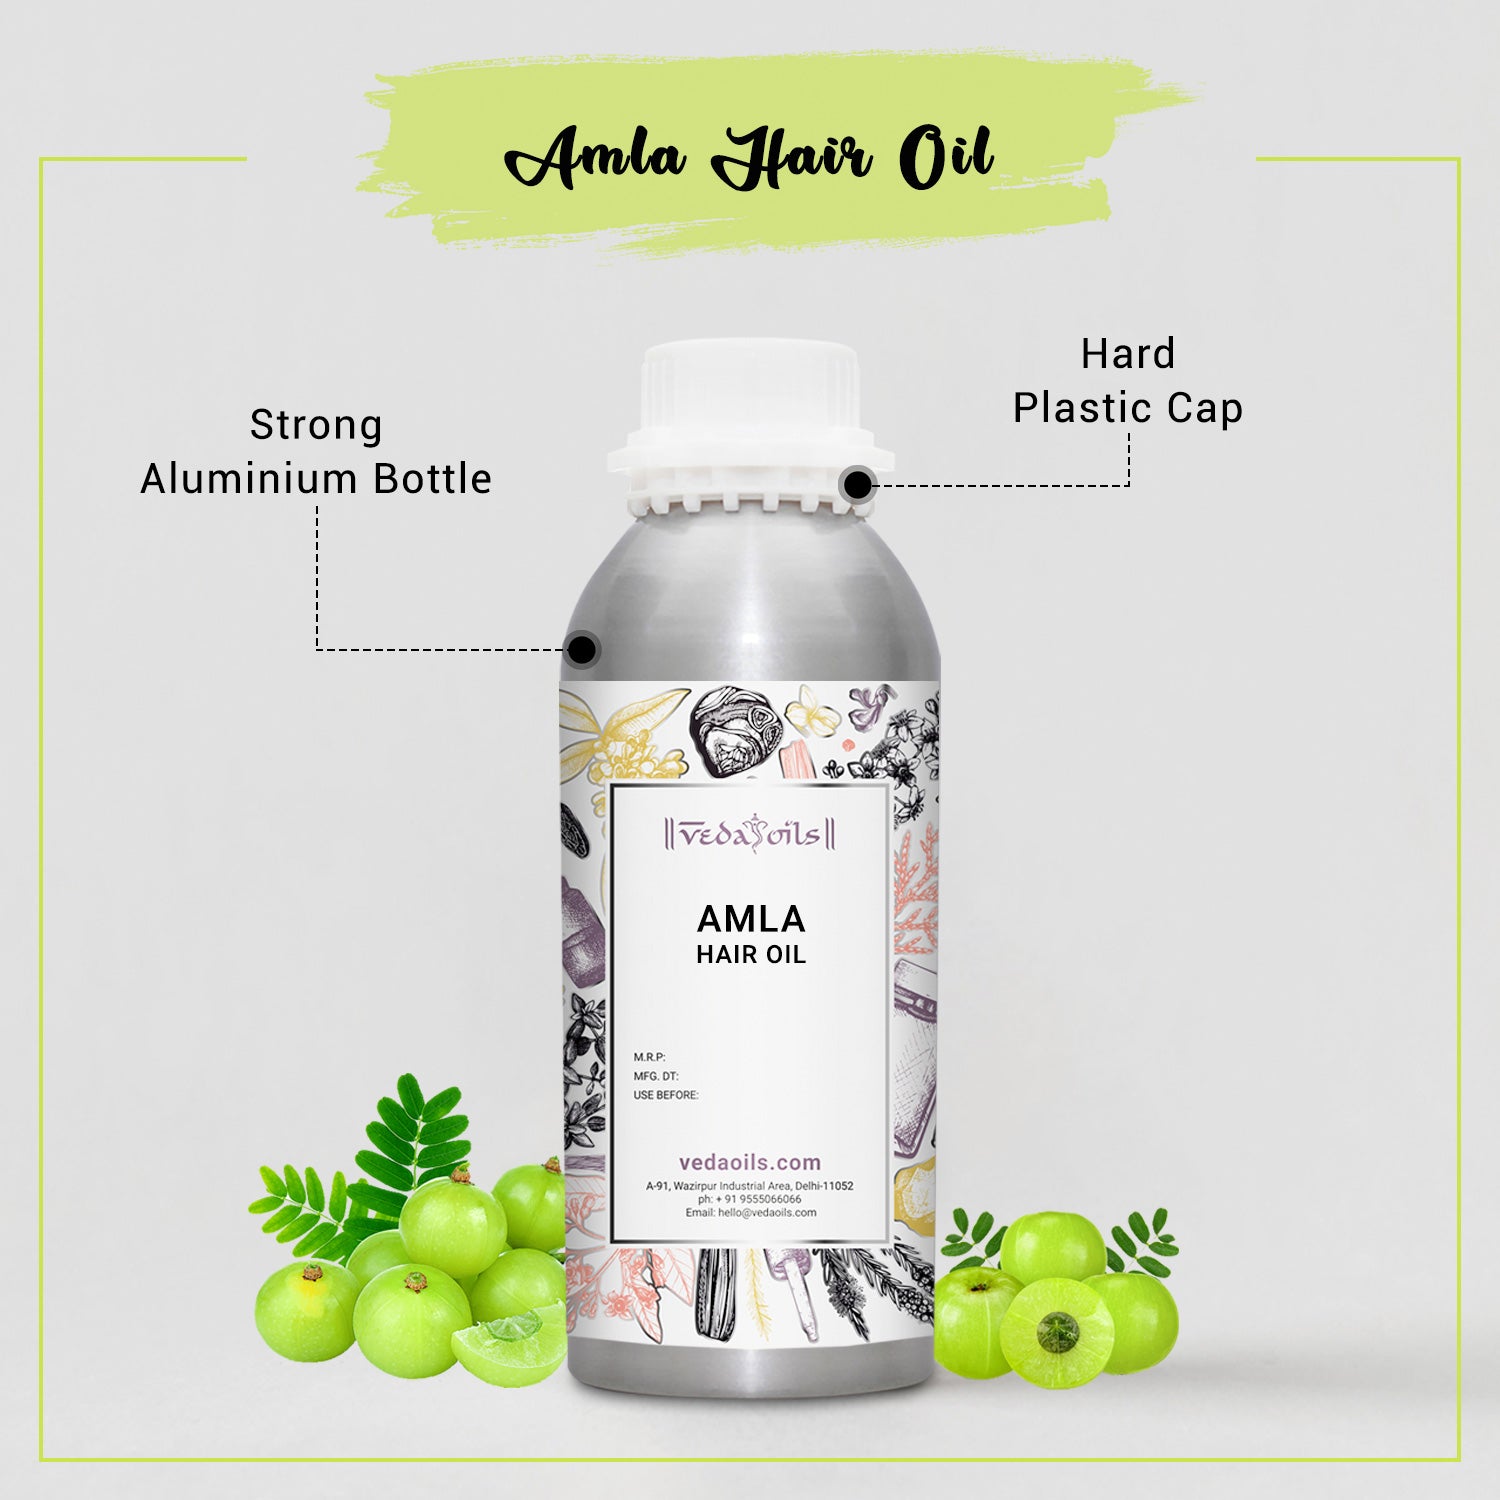 Cold Pressed Amla Oil - The Soul Food Company